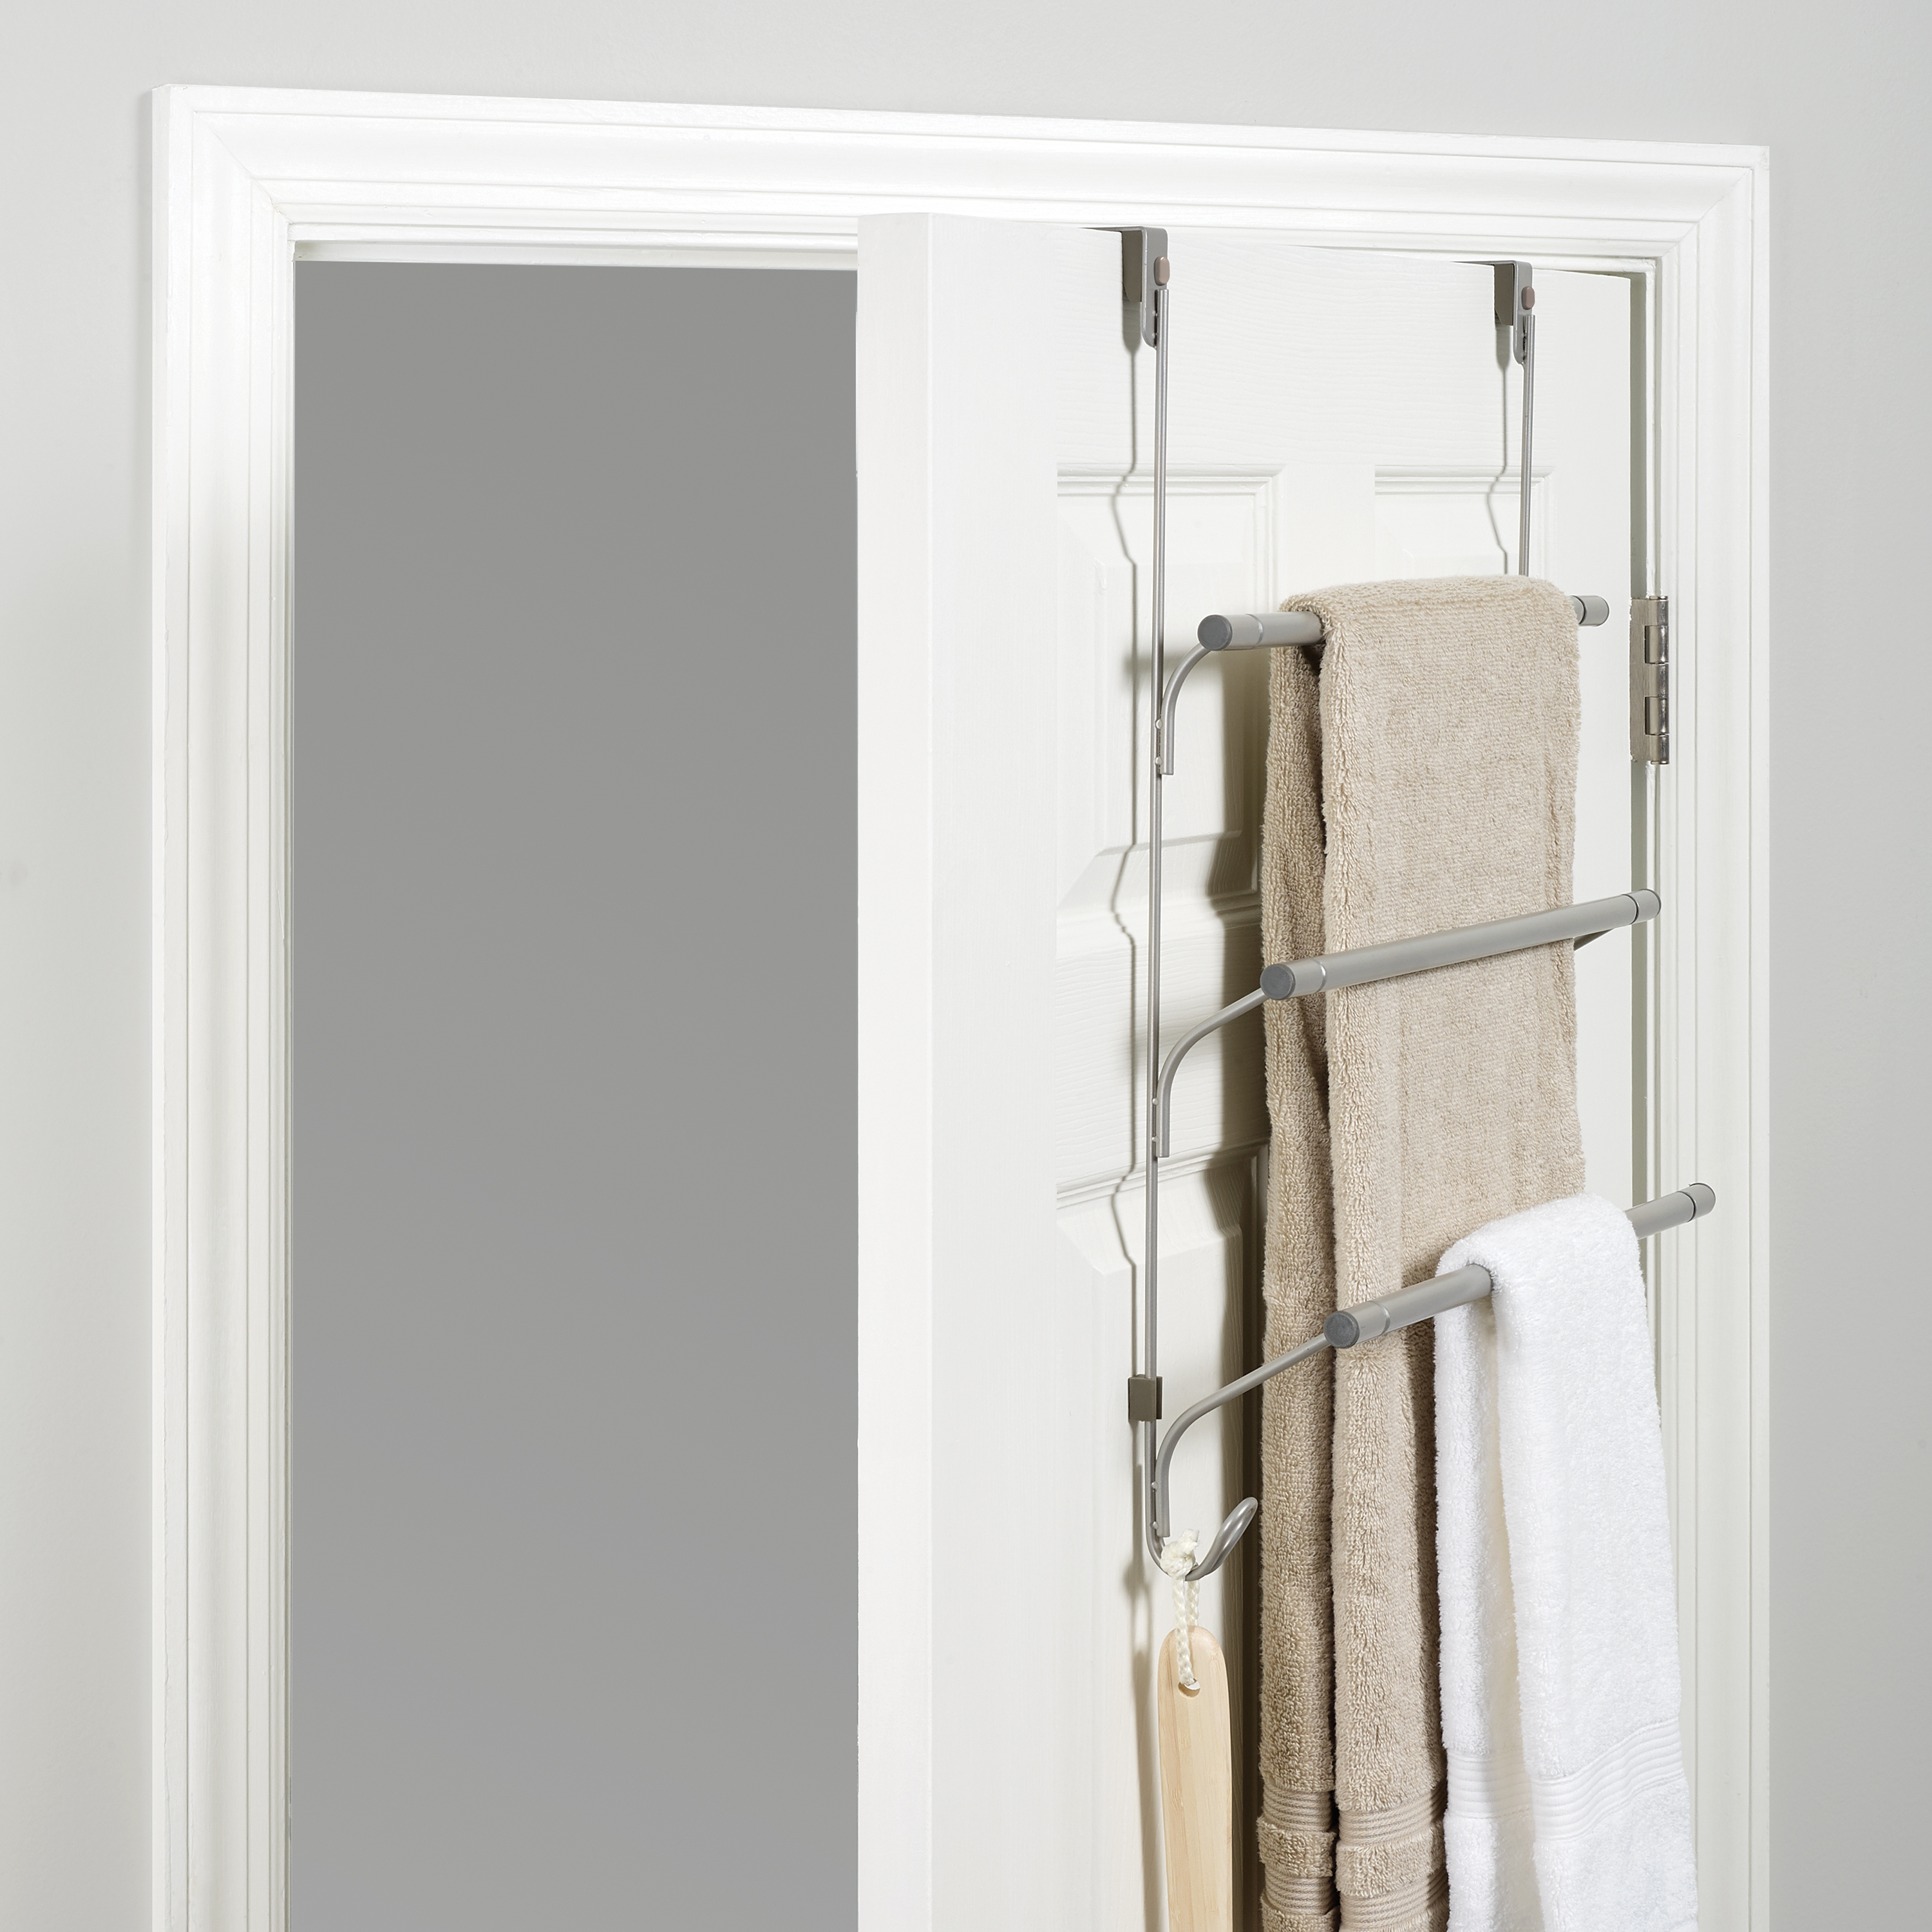 Mainstays SnugFit Over-the-Door 3-Tier Towel Bar with 2 Hooks, Satin Nickel - image 2 of 8